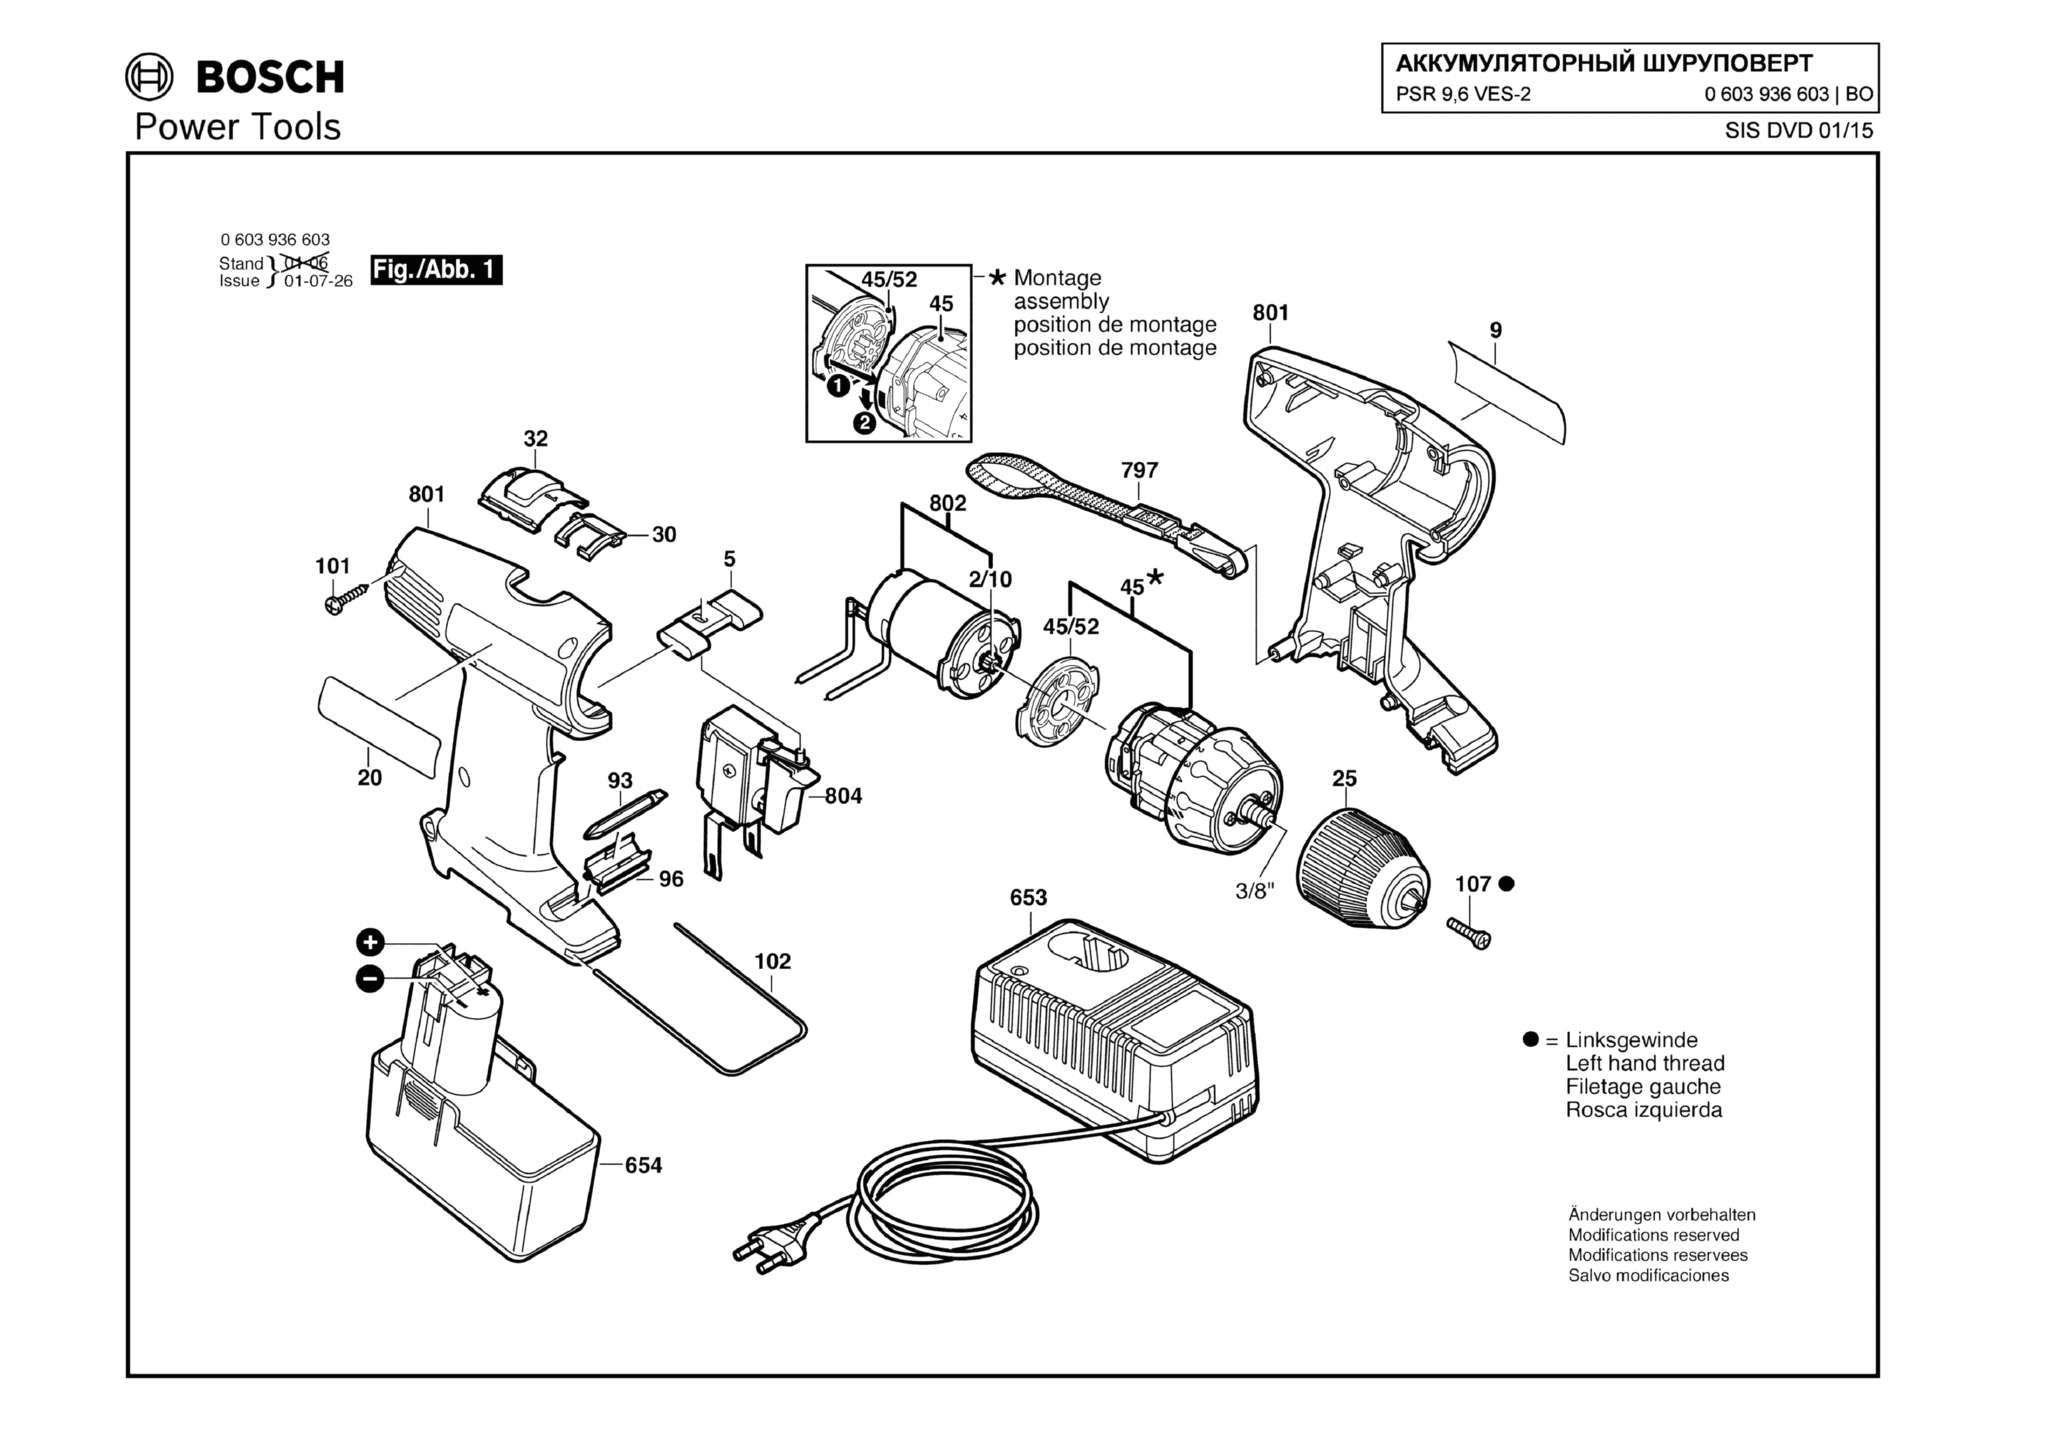 Запчасти, схема и деталировка Bosch PSR 9,6 VES-2 (ТИП 0603936603)